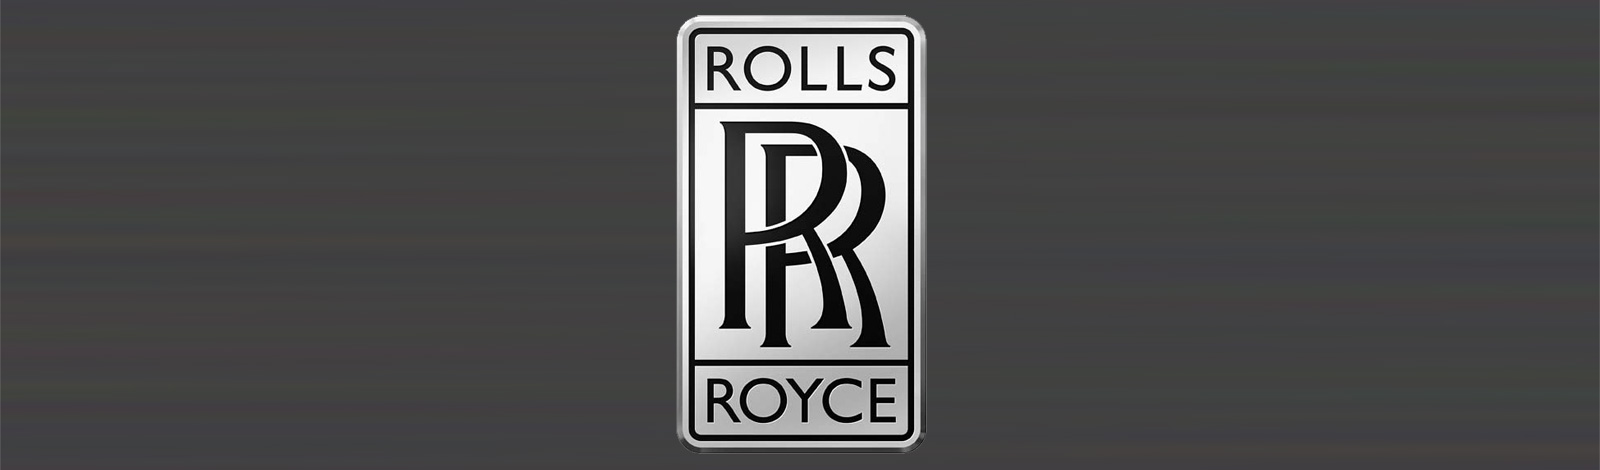 Rolls-Royce adds Black Badge models - Drive